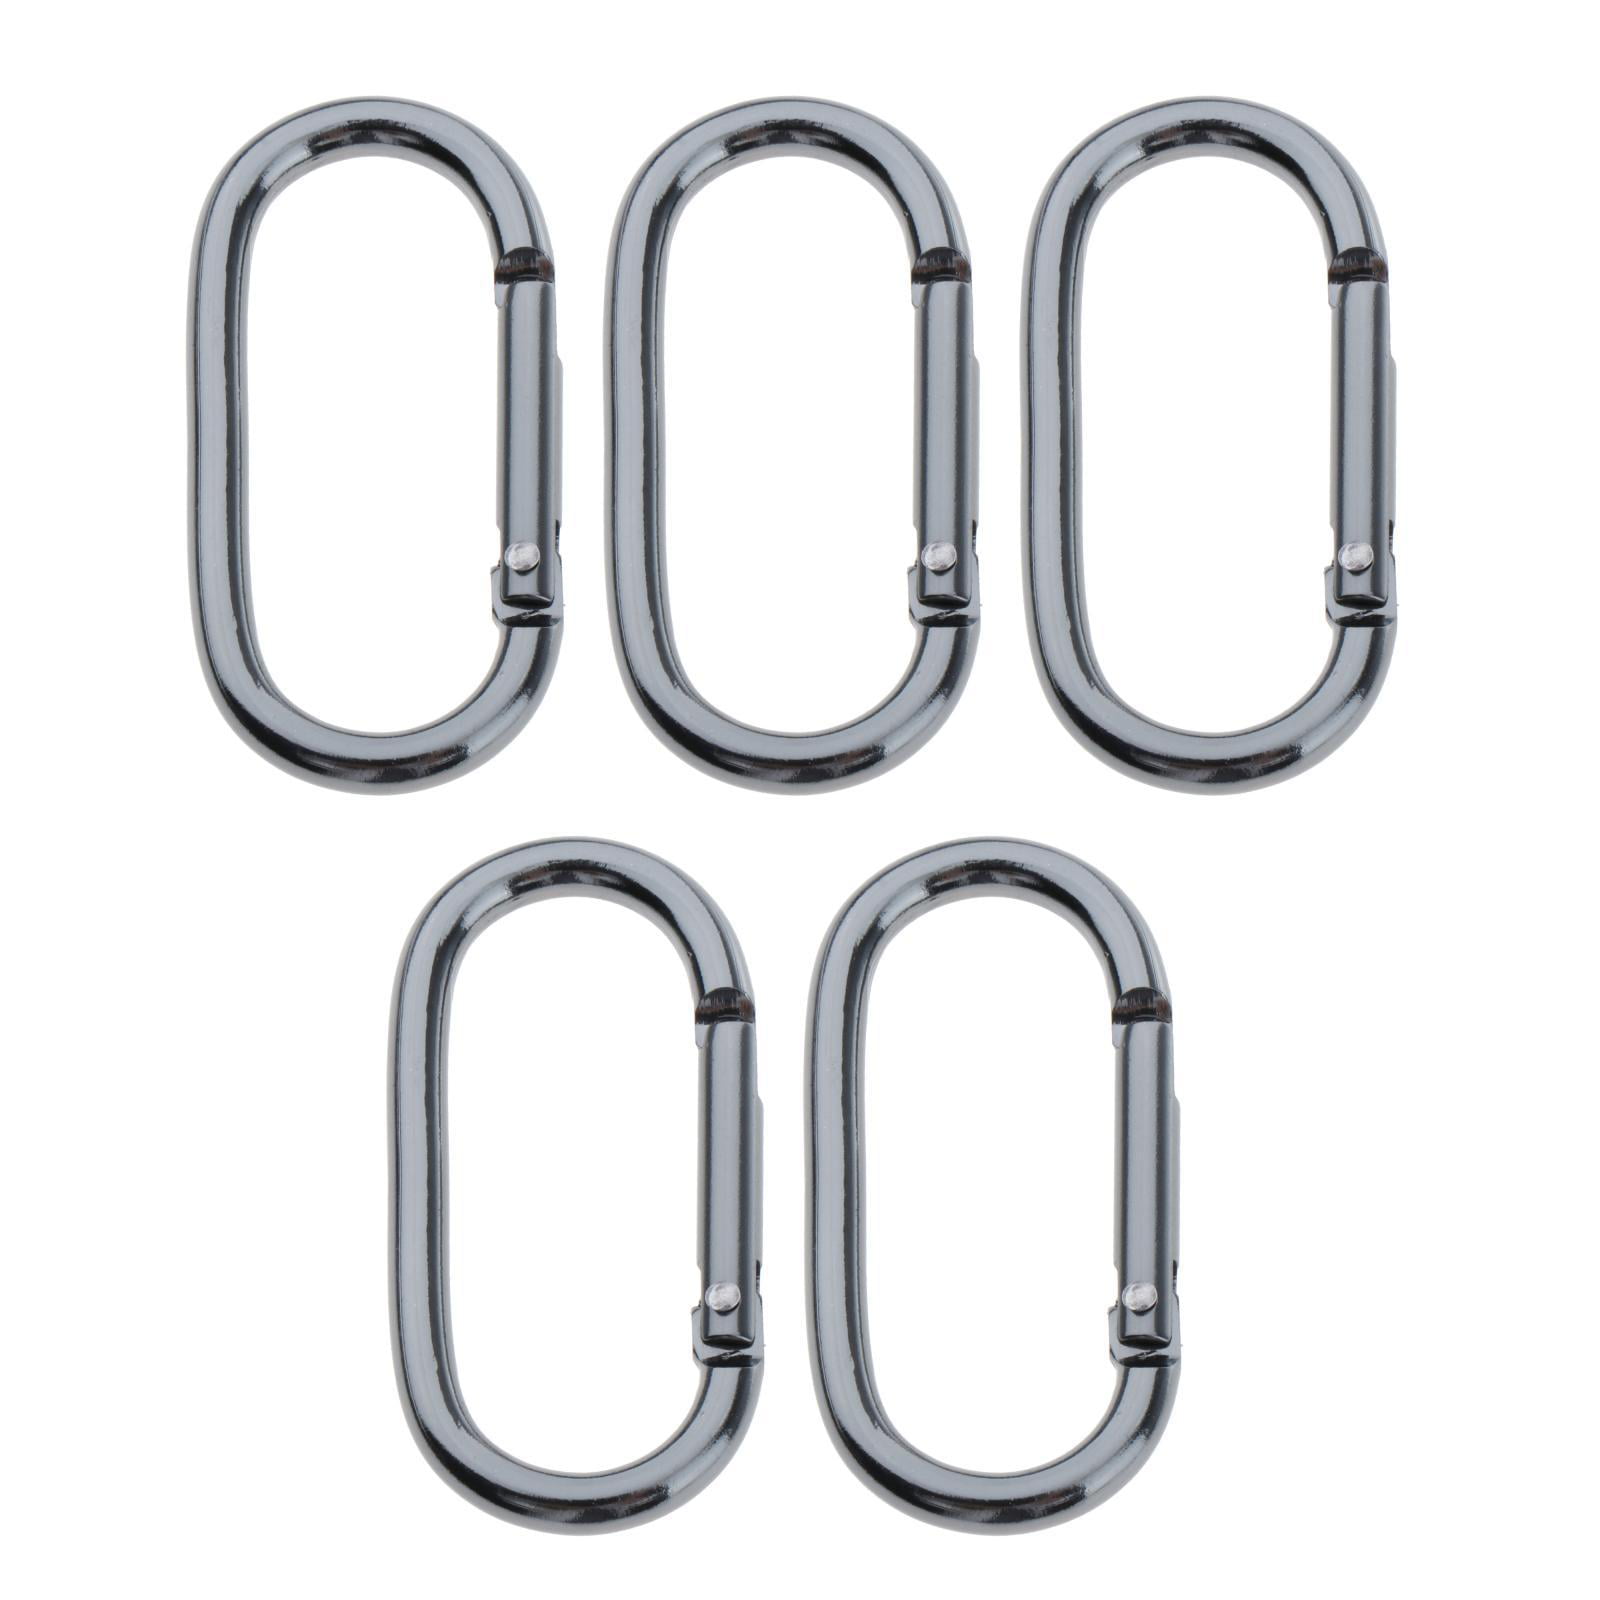 5x Aluminum Carabiner D-Ring Key Chain Clip Karabiner Camping Keyring Snap Hook 